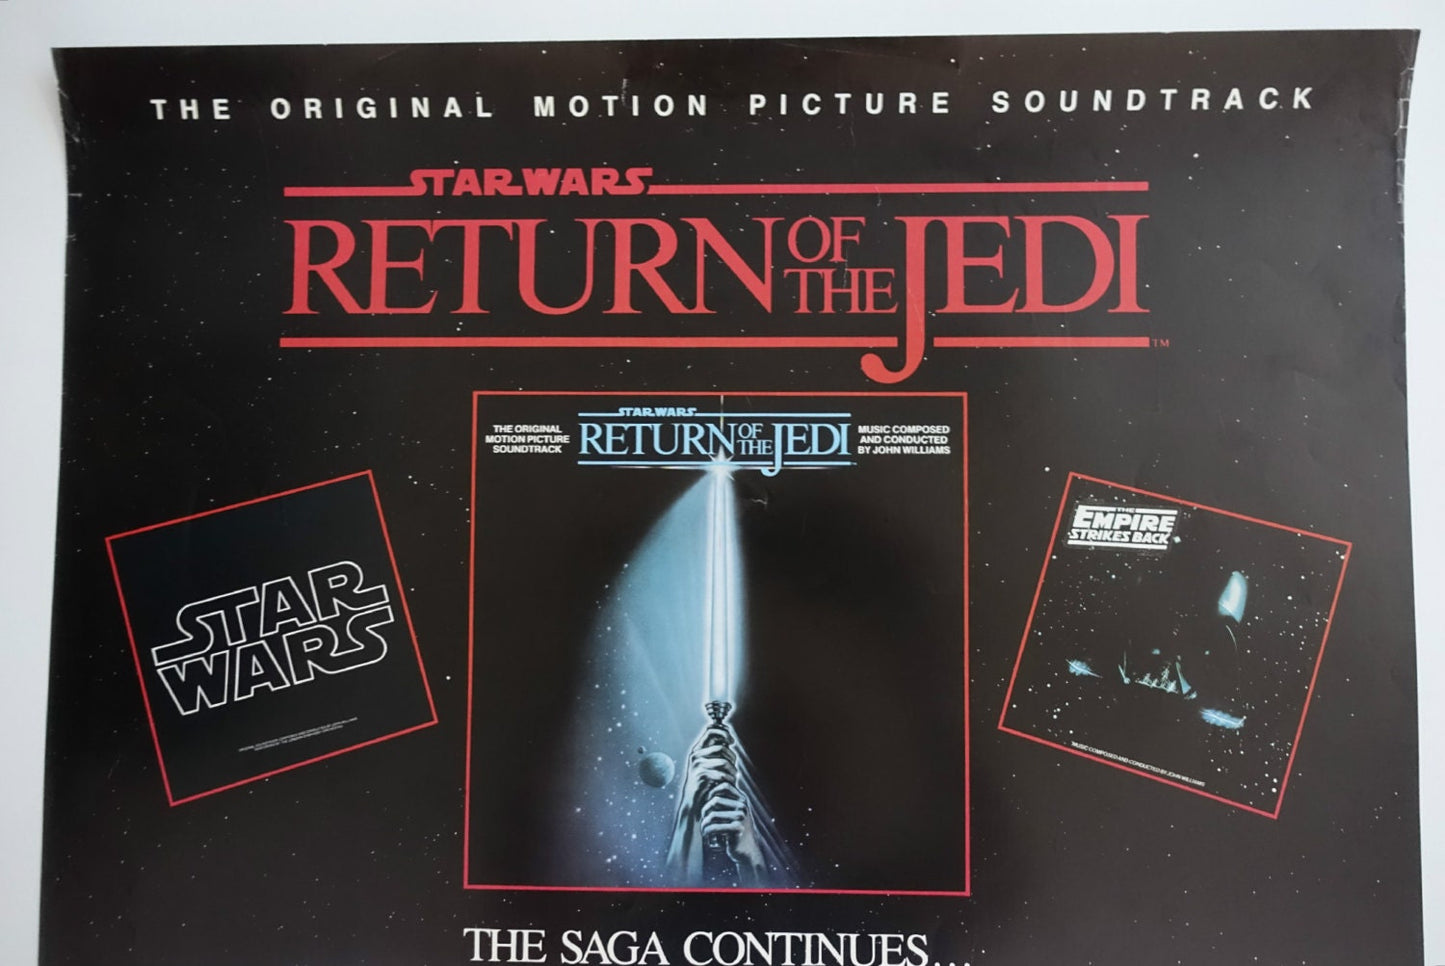 1983 Star Wars "Return of the Jedi" Movie Poster (3-CPO/R2-D2 version) - Original Vintage Poster